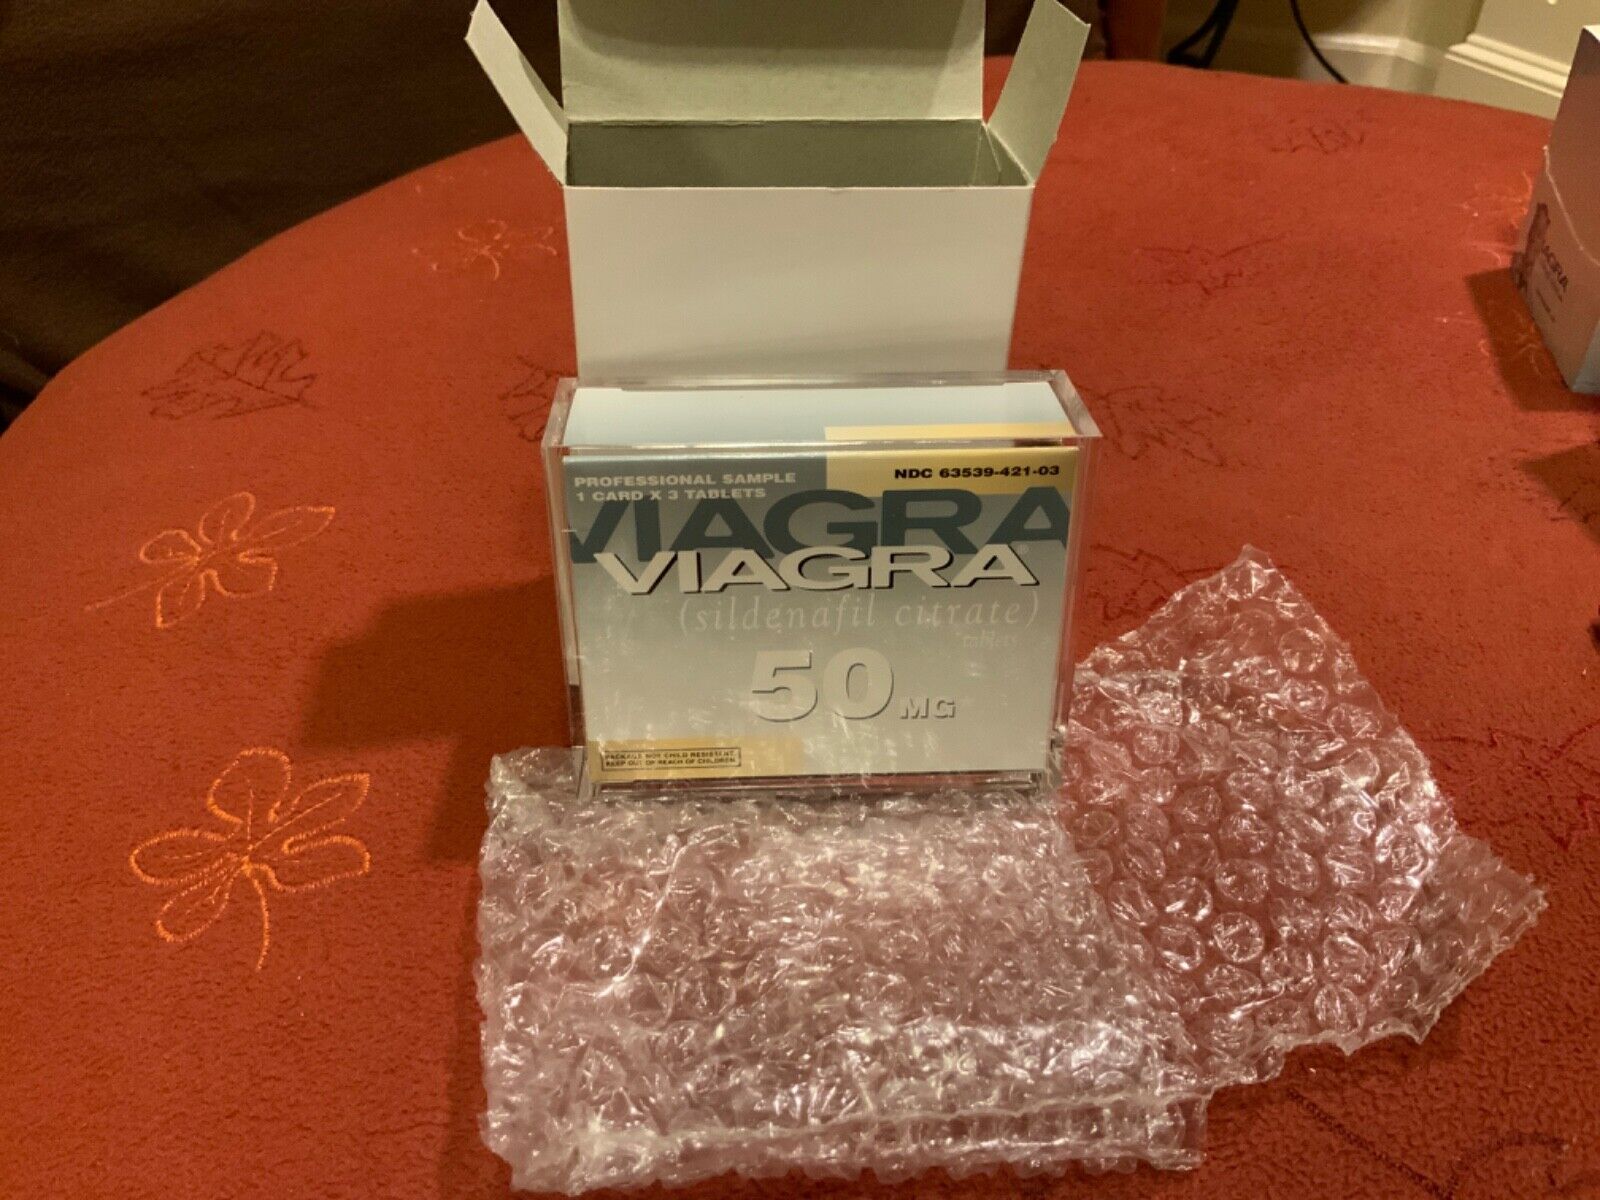 NIB Vintage Viagra Paperweight in Original Box Gag Gift Pfizer Drug Rep Promo